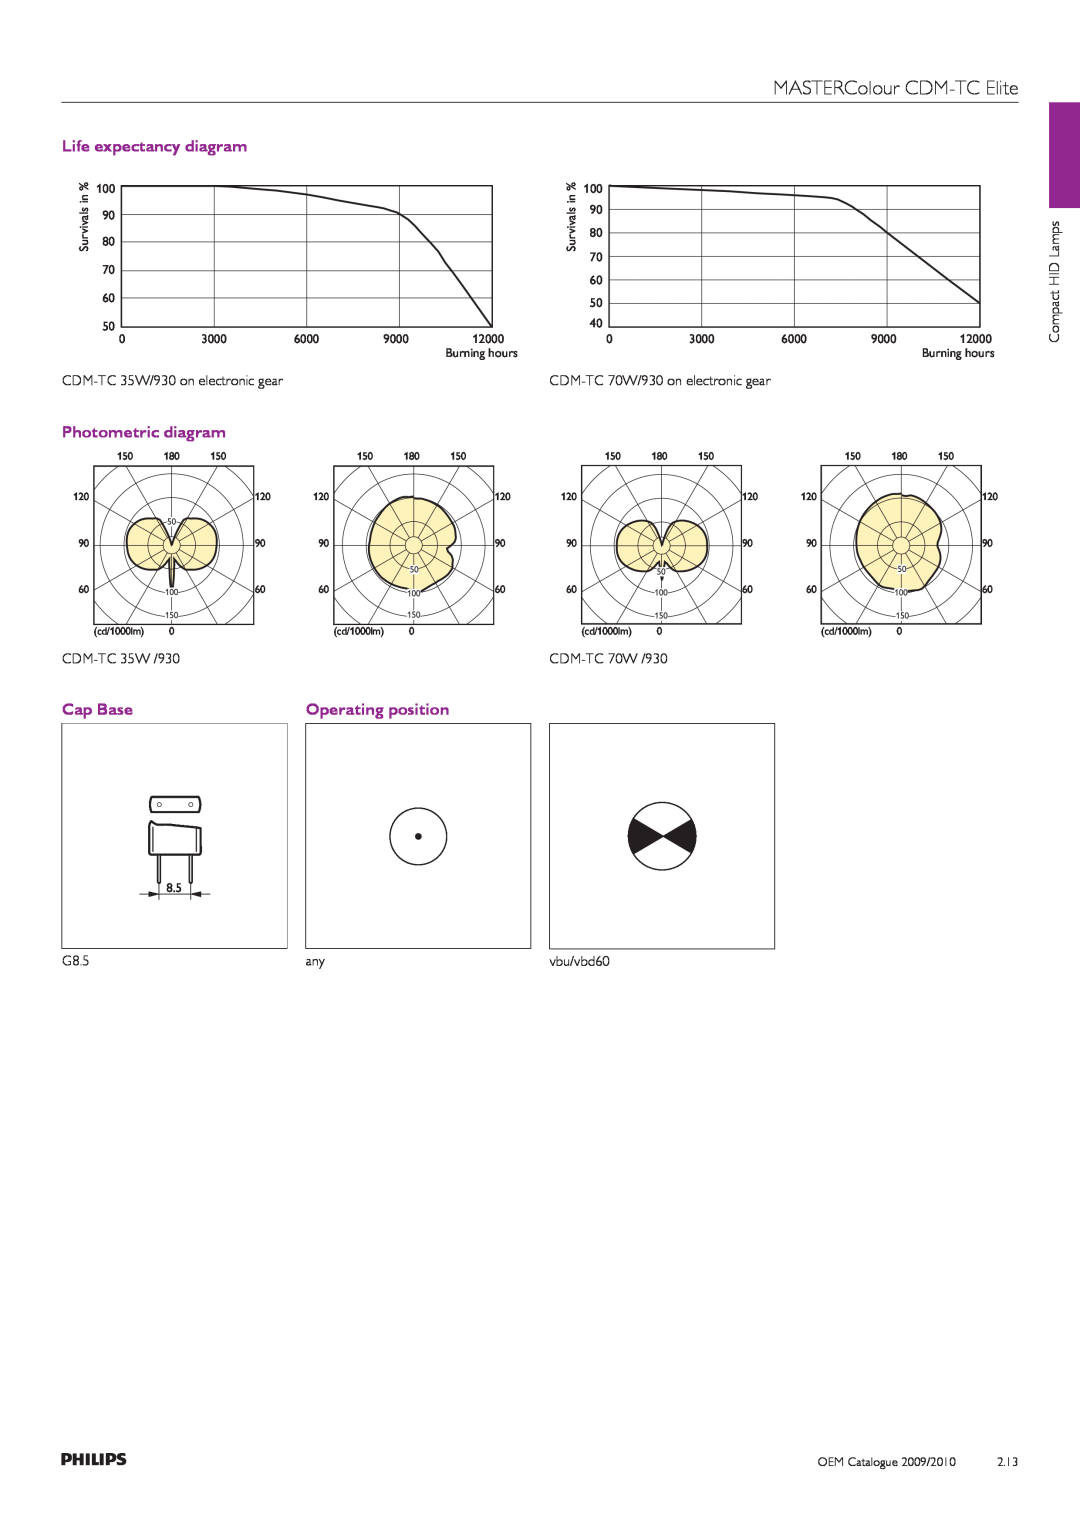 Philips Compact HID Lamp and Gear manual MASTERColour CDM-TCElite, Life expectancy diagram, Photometric diagram, Cap Base 